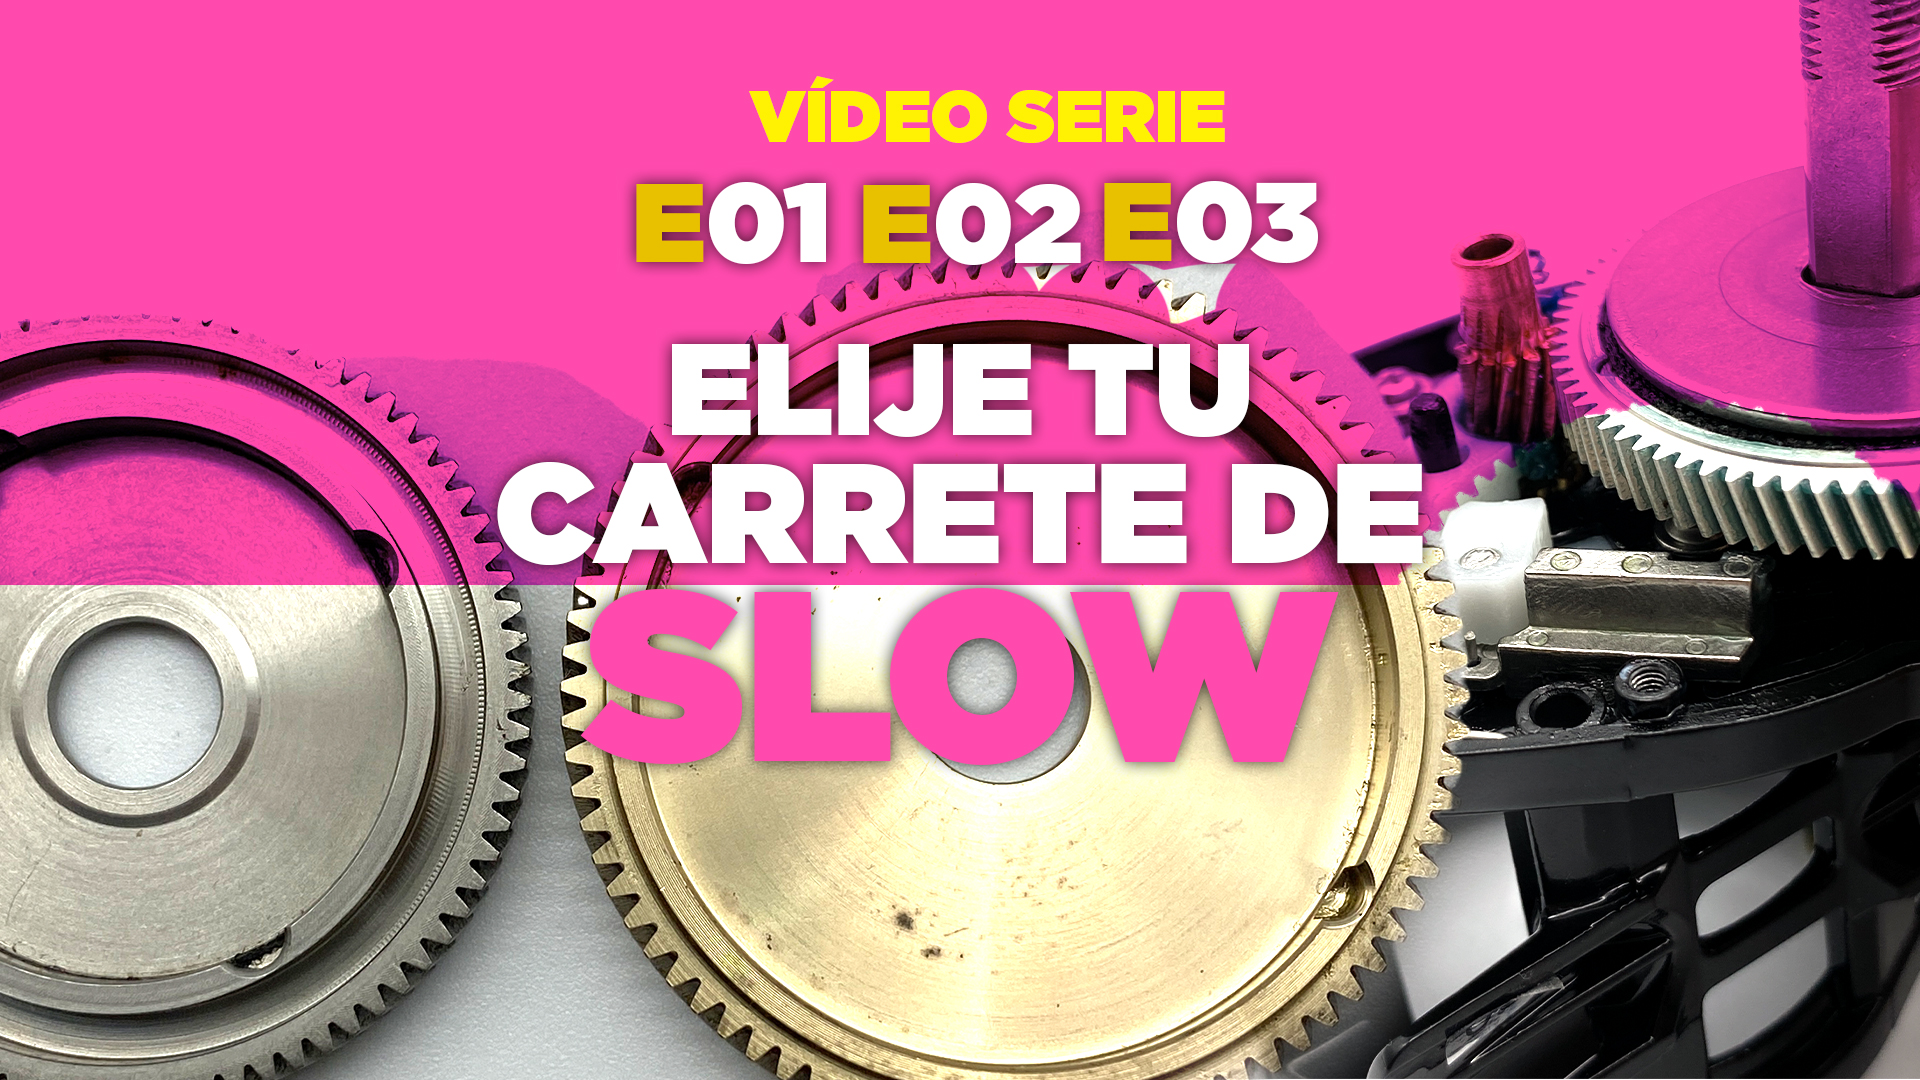 Video Serie Completa | Como elegir tu carrete de slow. Tres episodios 